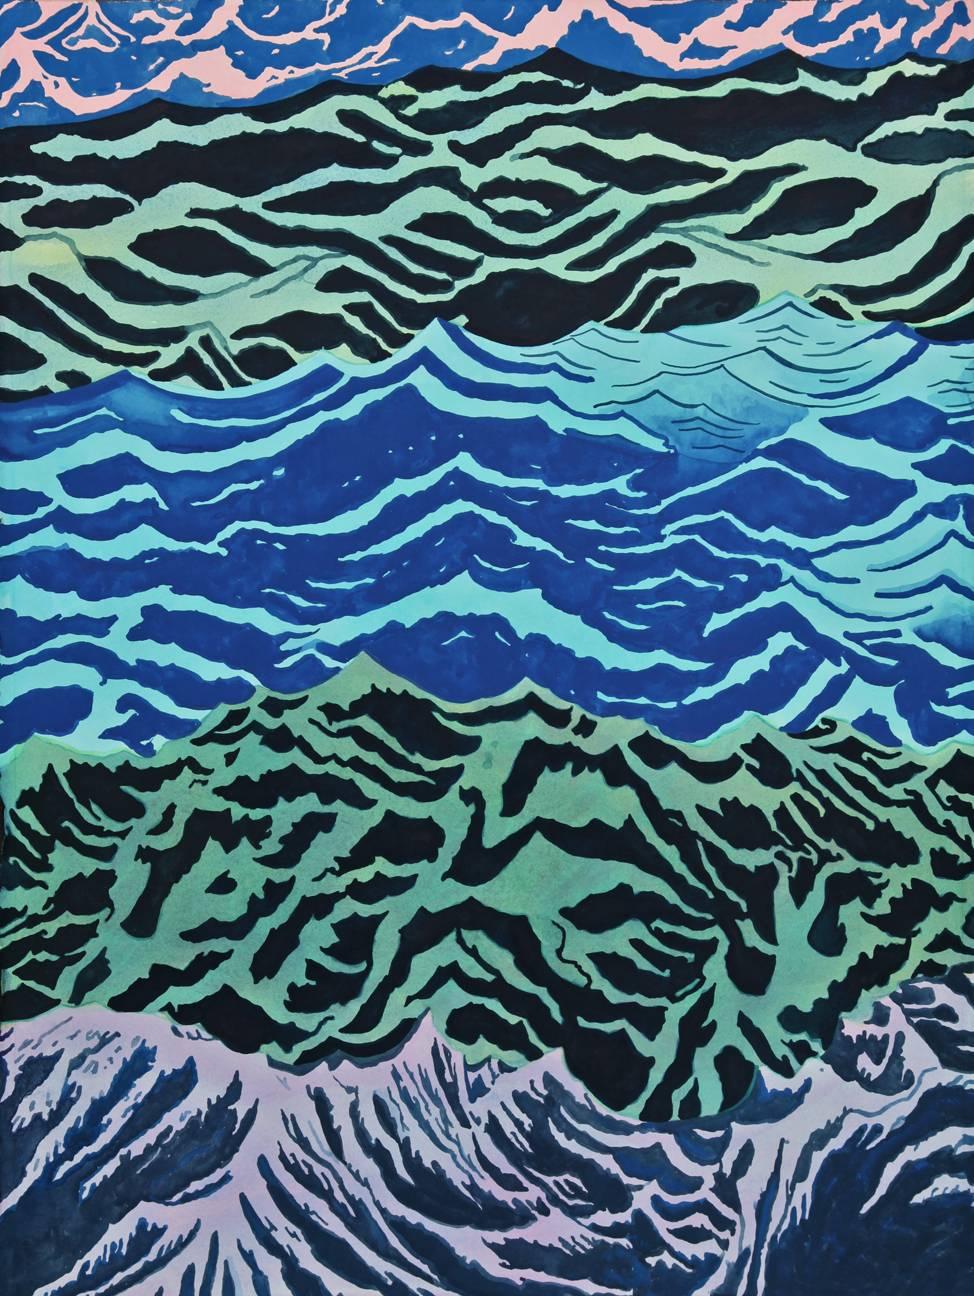 Aaron Morse Landscape Art - Waves